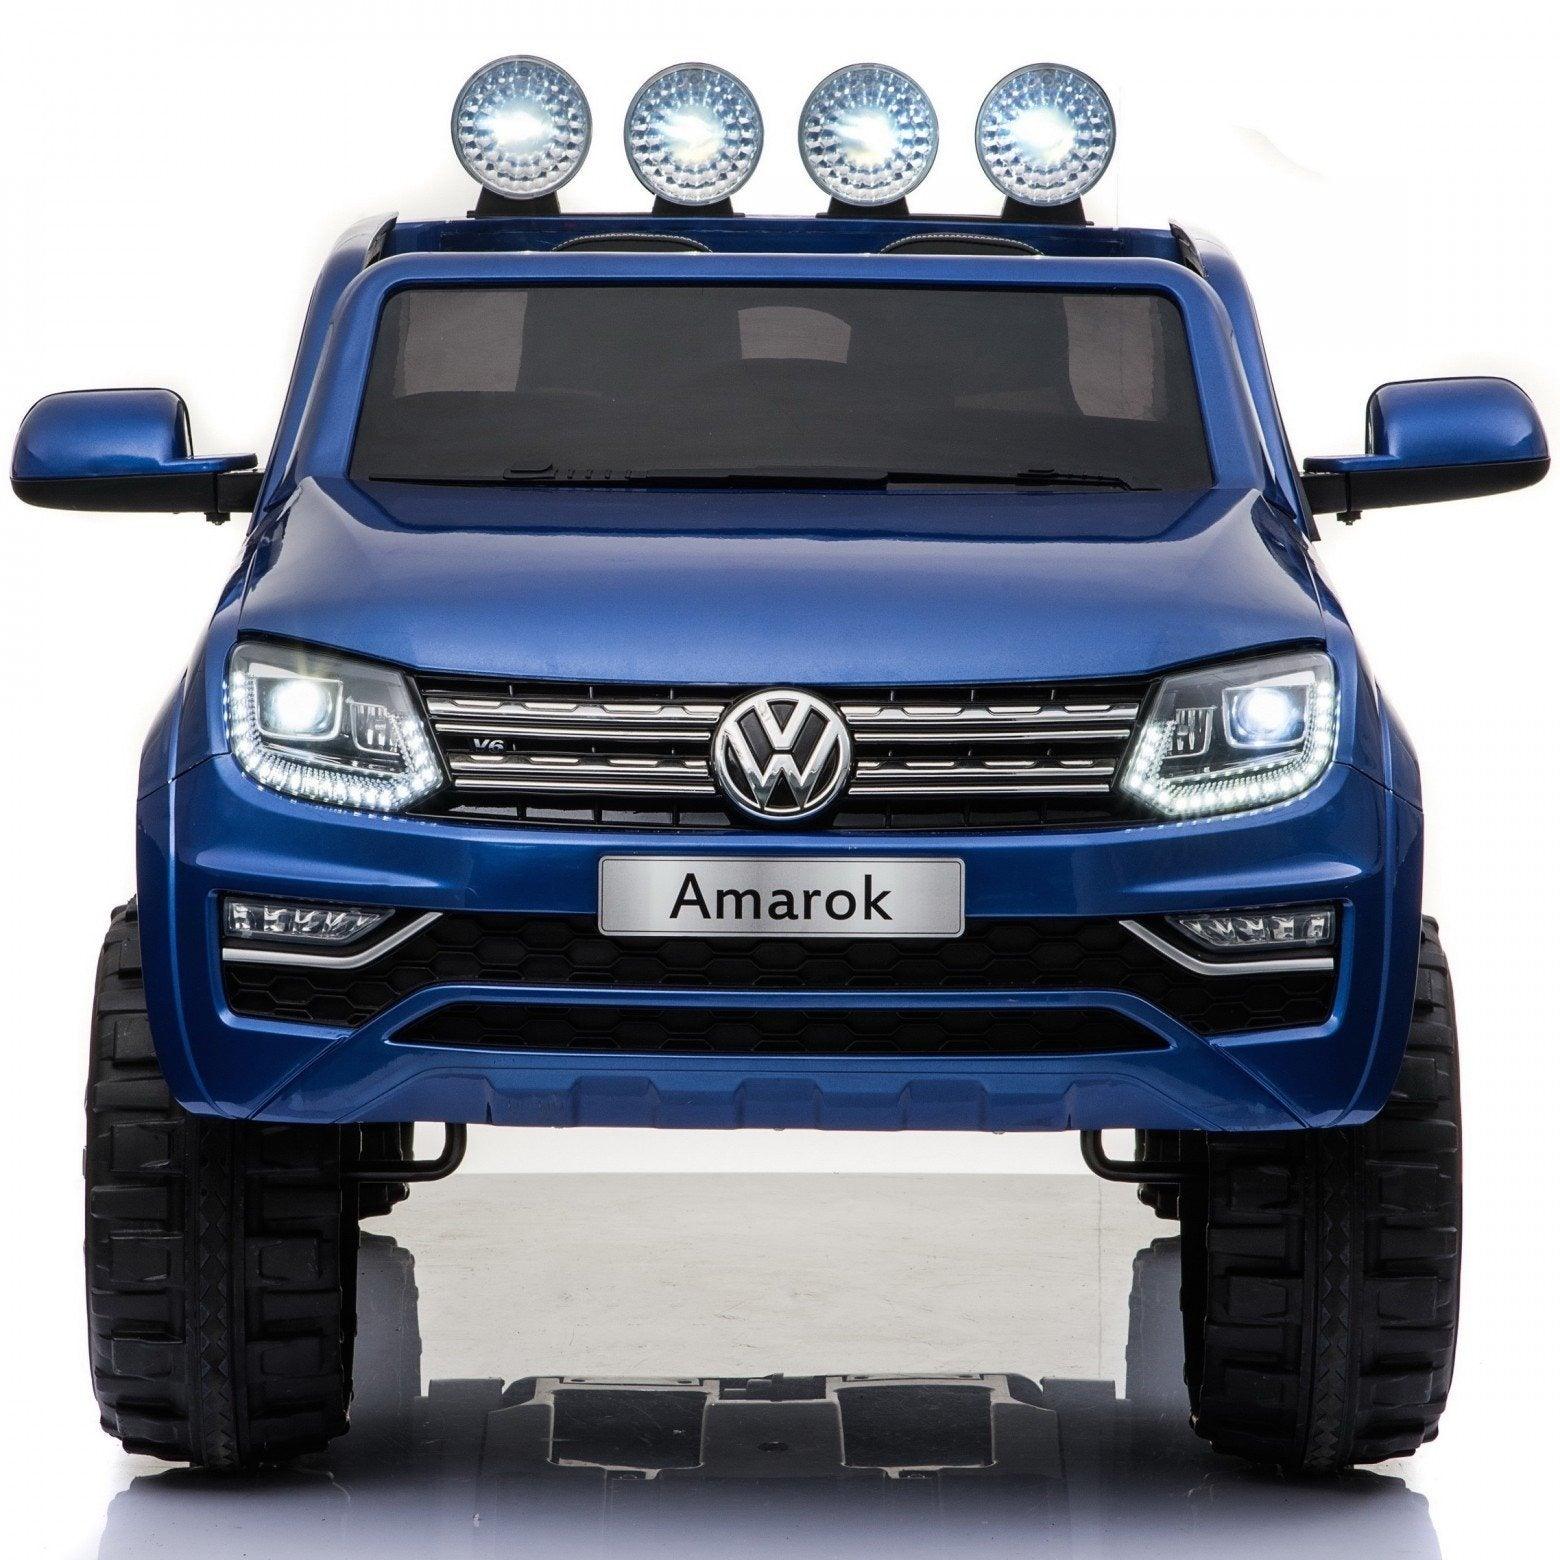 12V Volkswagen Amarok Ride On Car For Kids with Remote Control - 11Cart